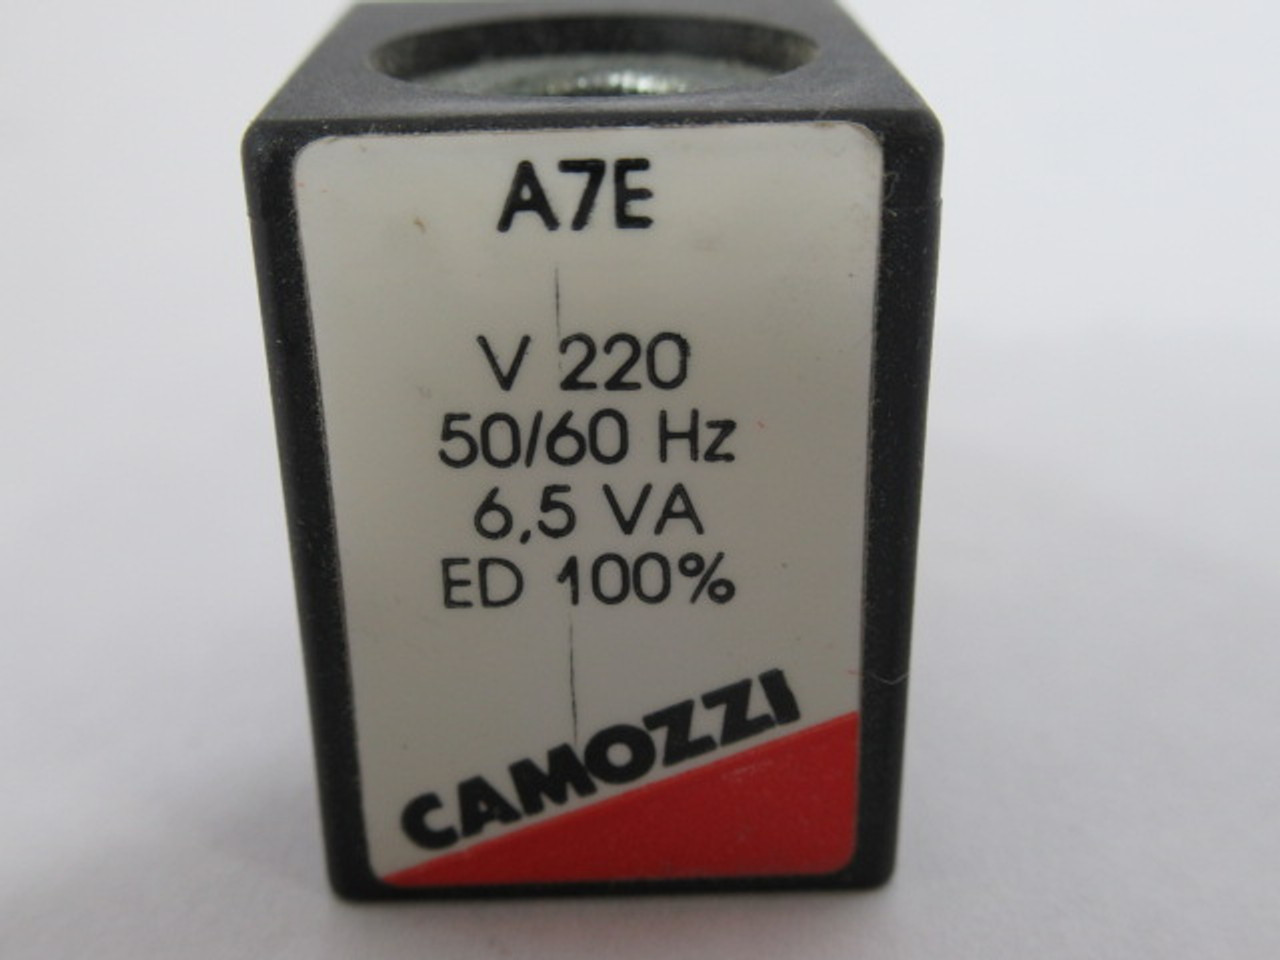 Camozzi A7E Solenoid Valve 22V 50/60Hz 6.5VA 100%ED USED